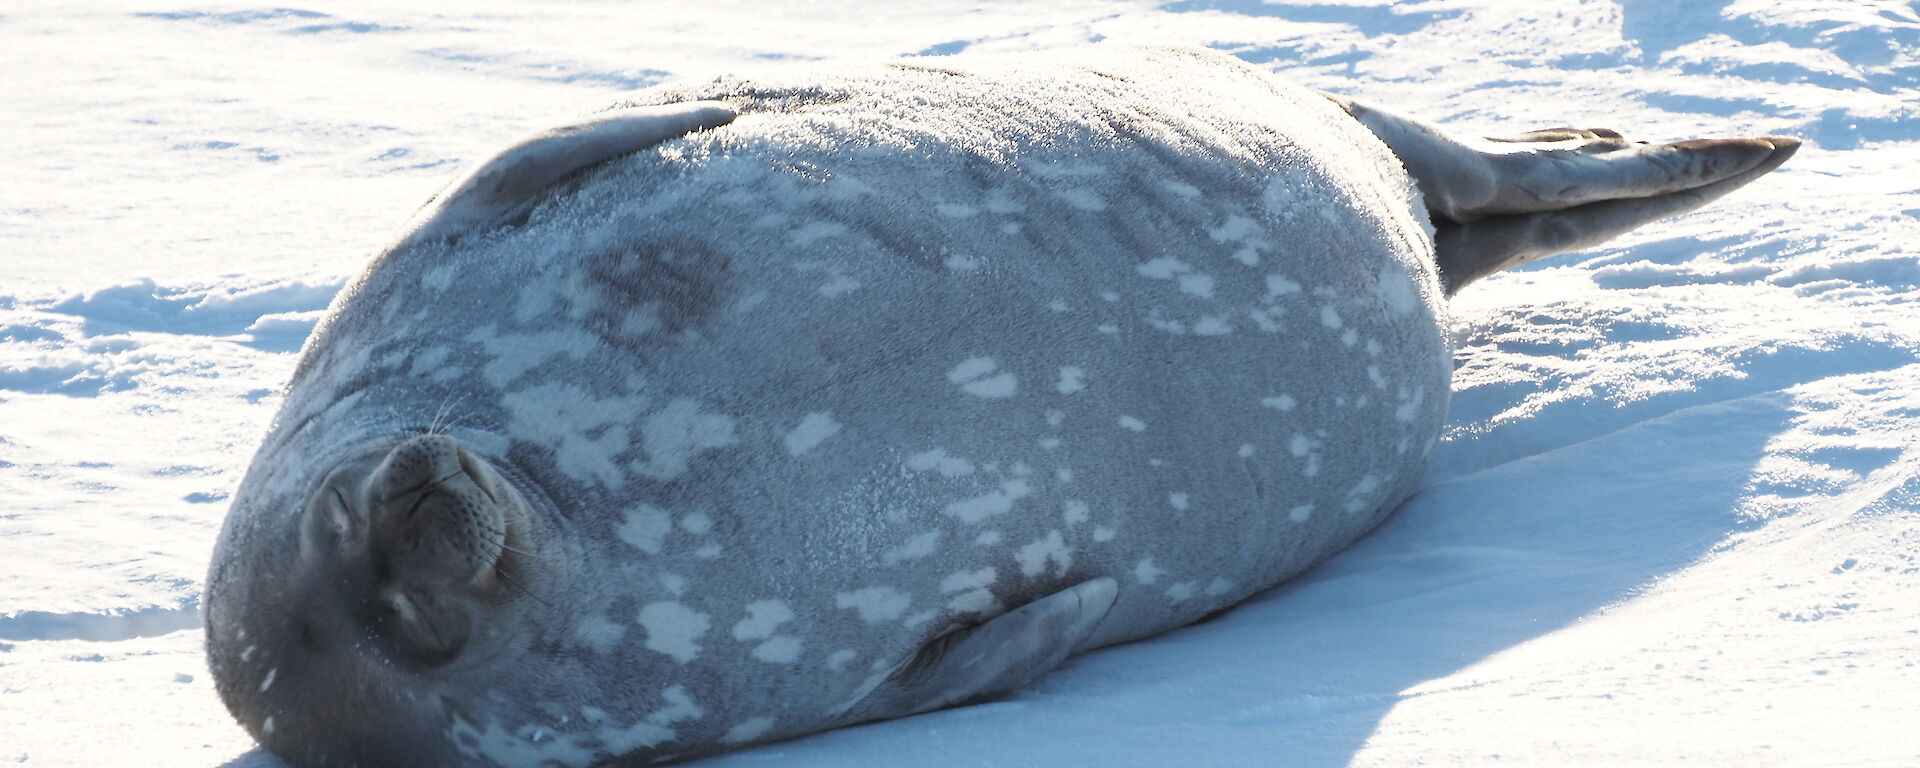 Elephant seal enjoying some fleeting spring sunshine while lying on the snow